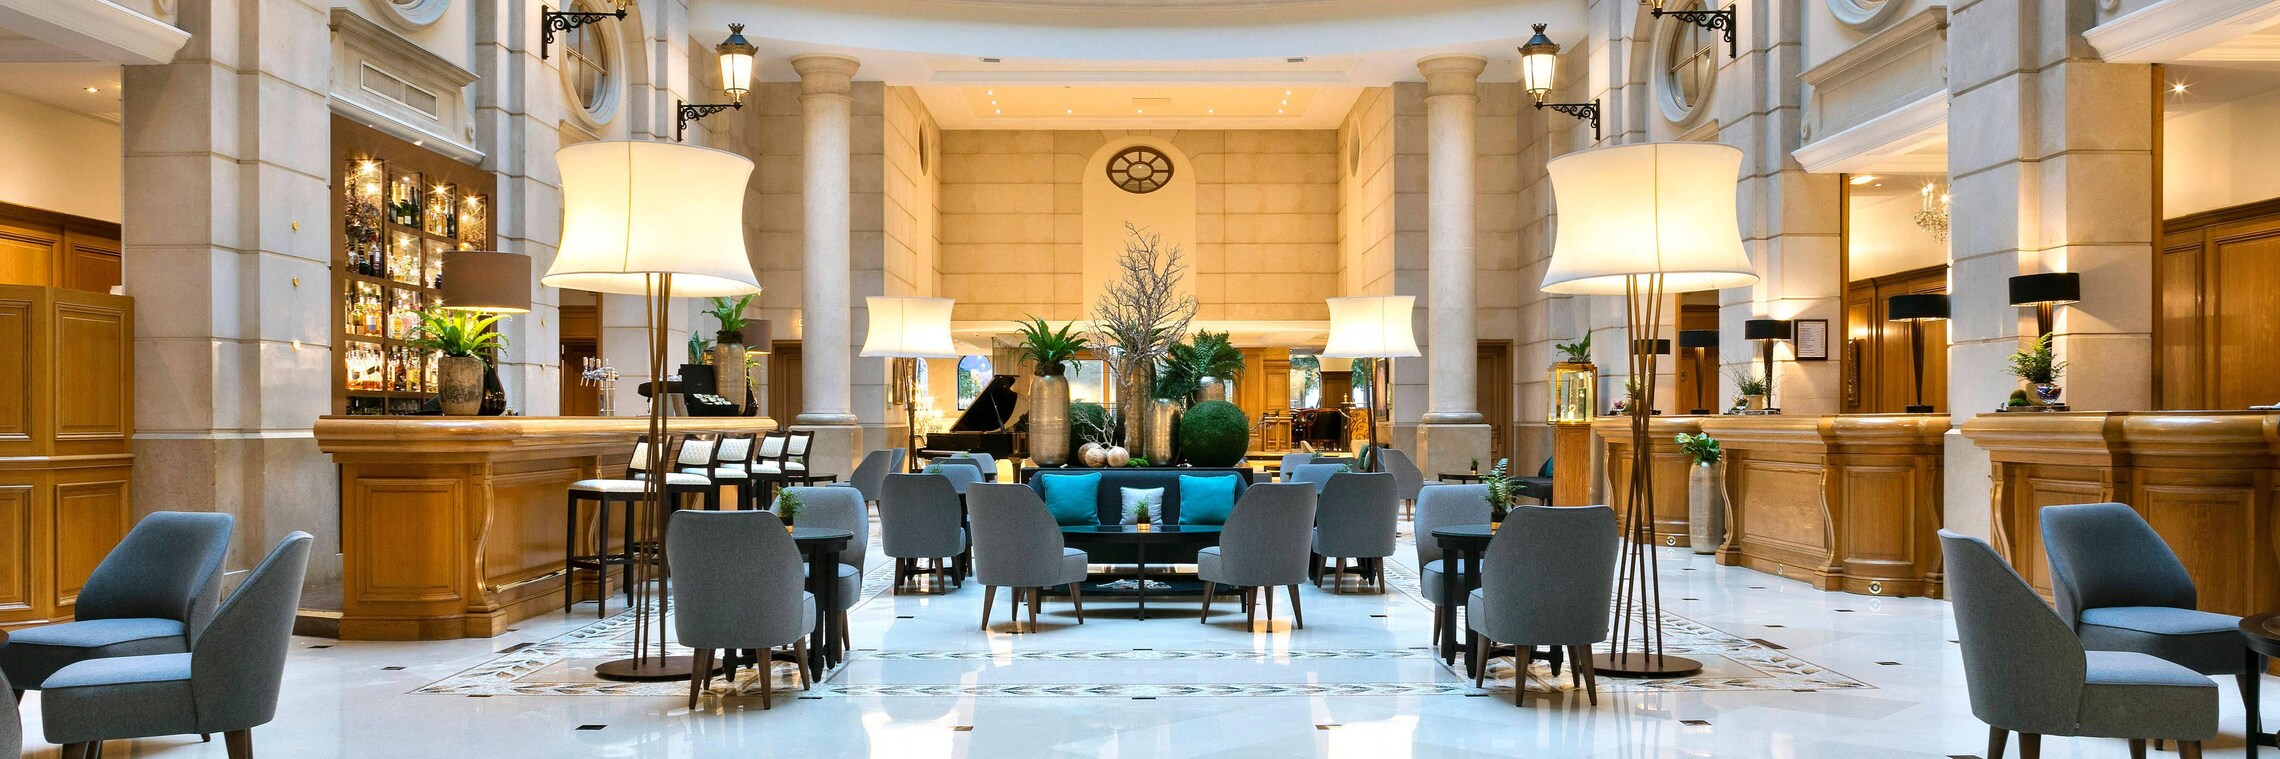 Our 5-star hotel lobby